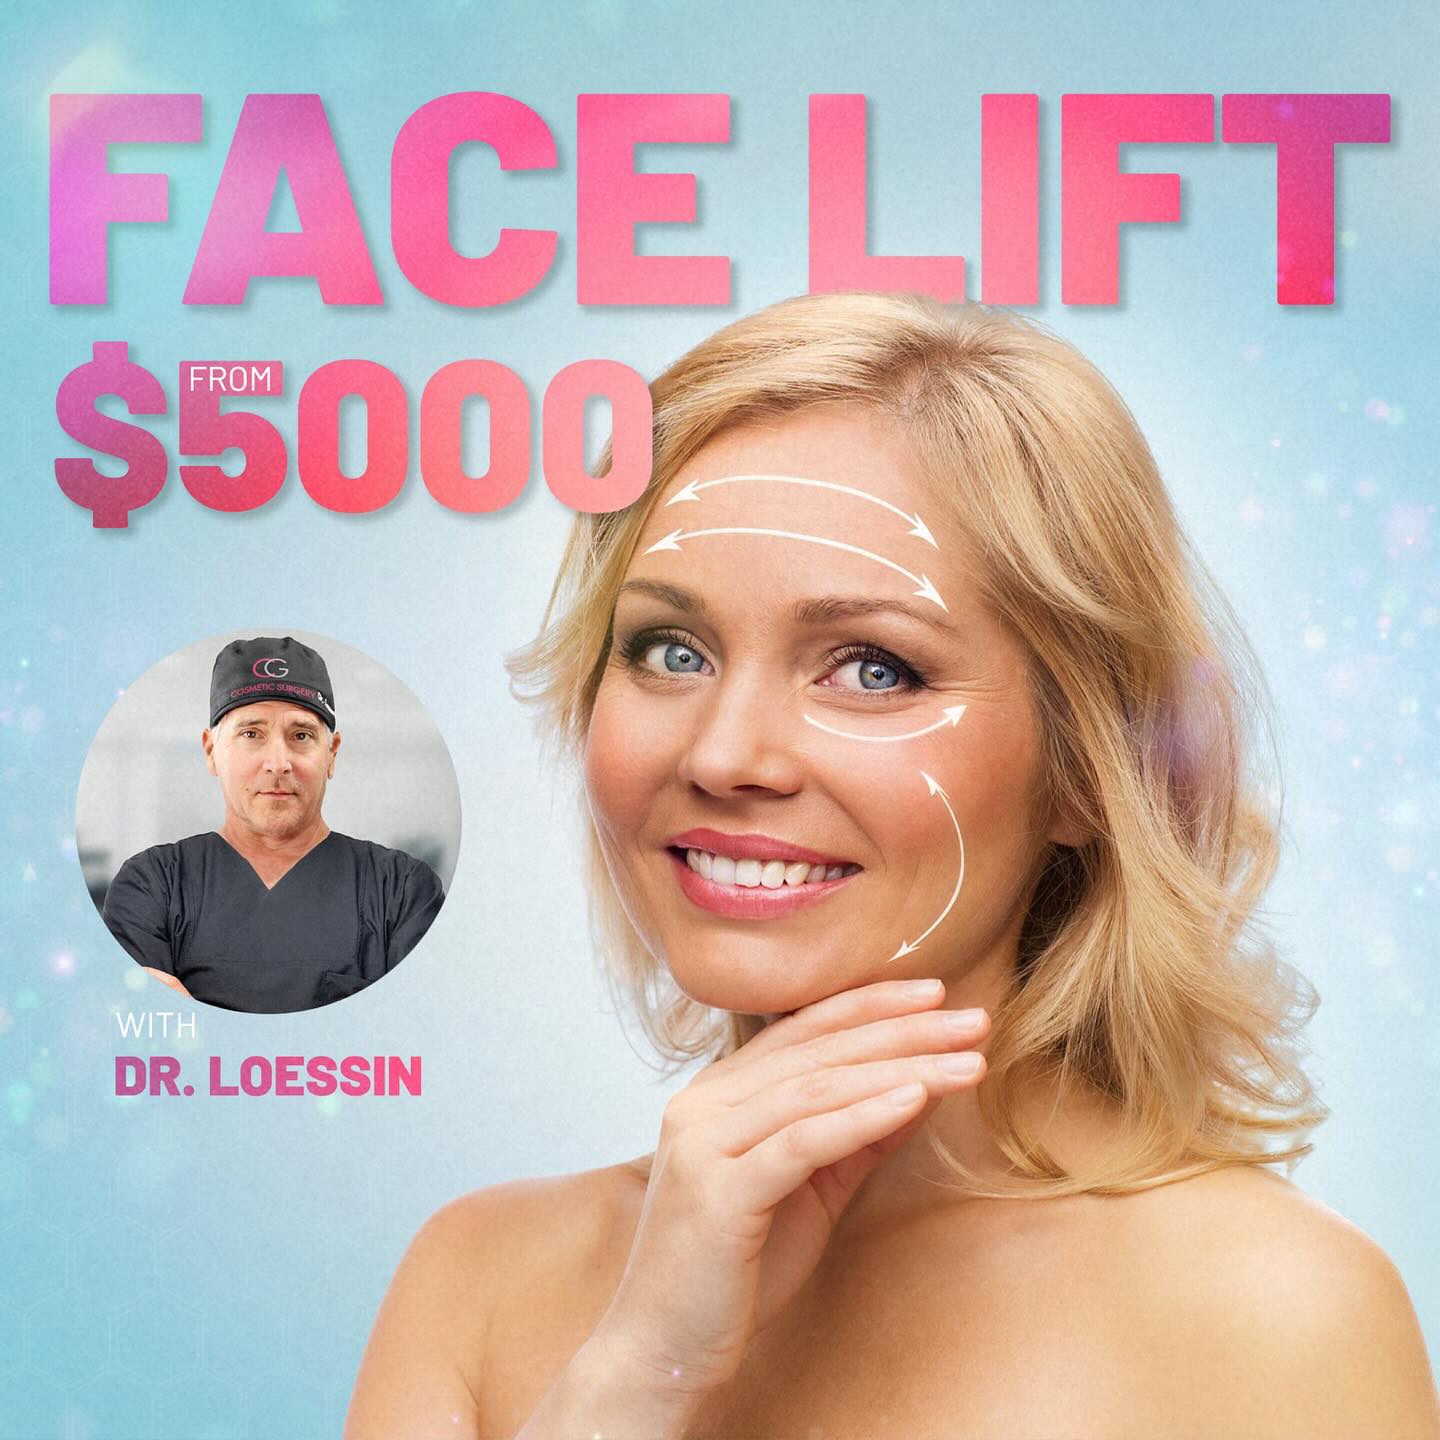 Full Face Lift $5,000 Dr. Loessin